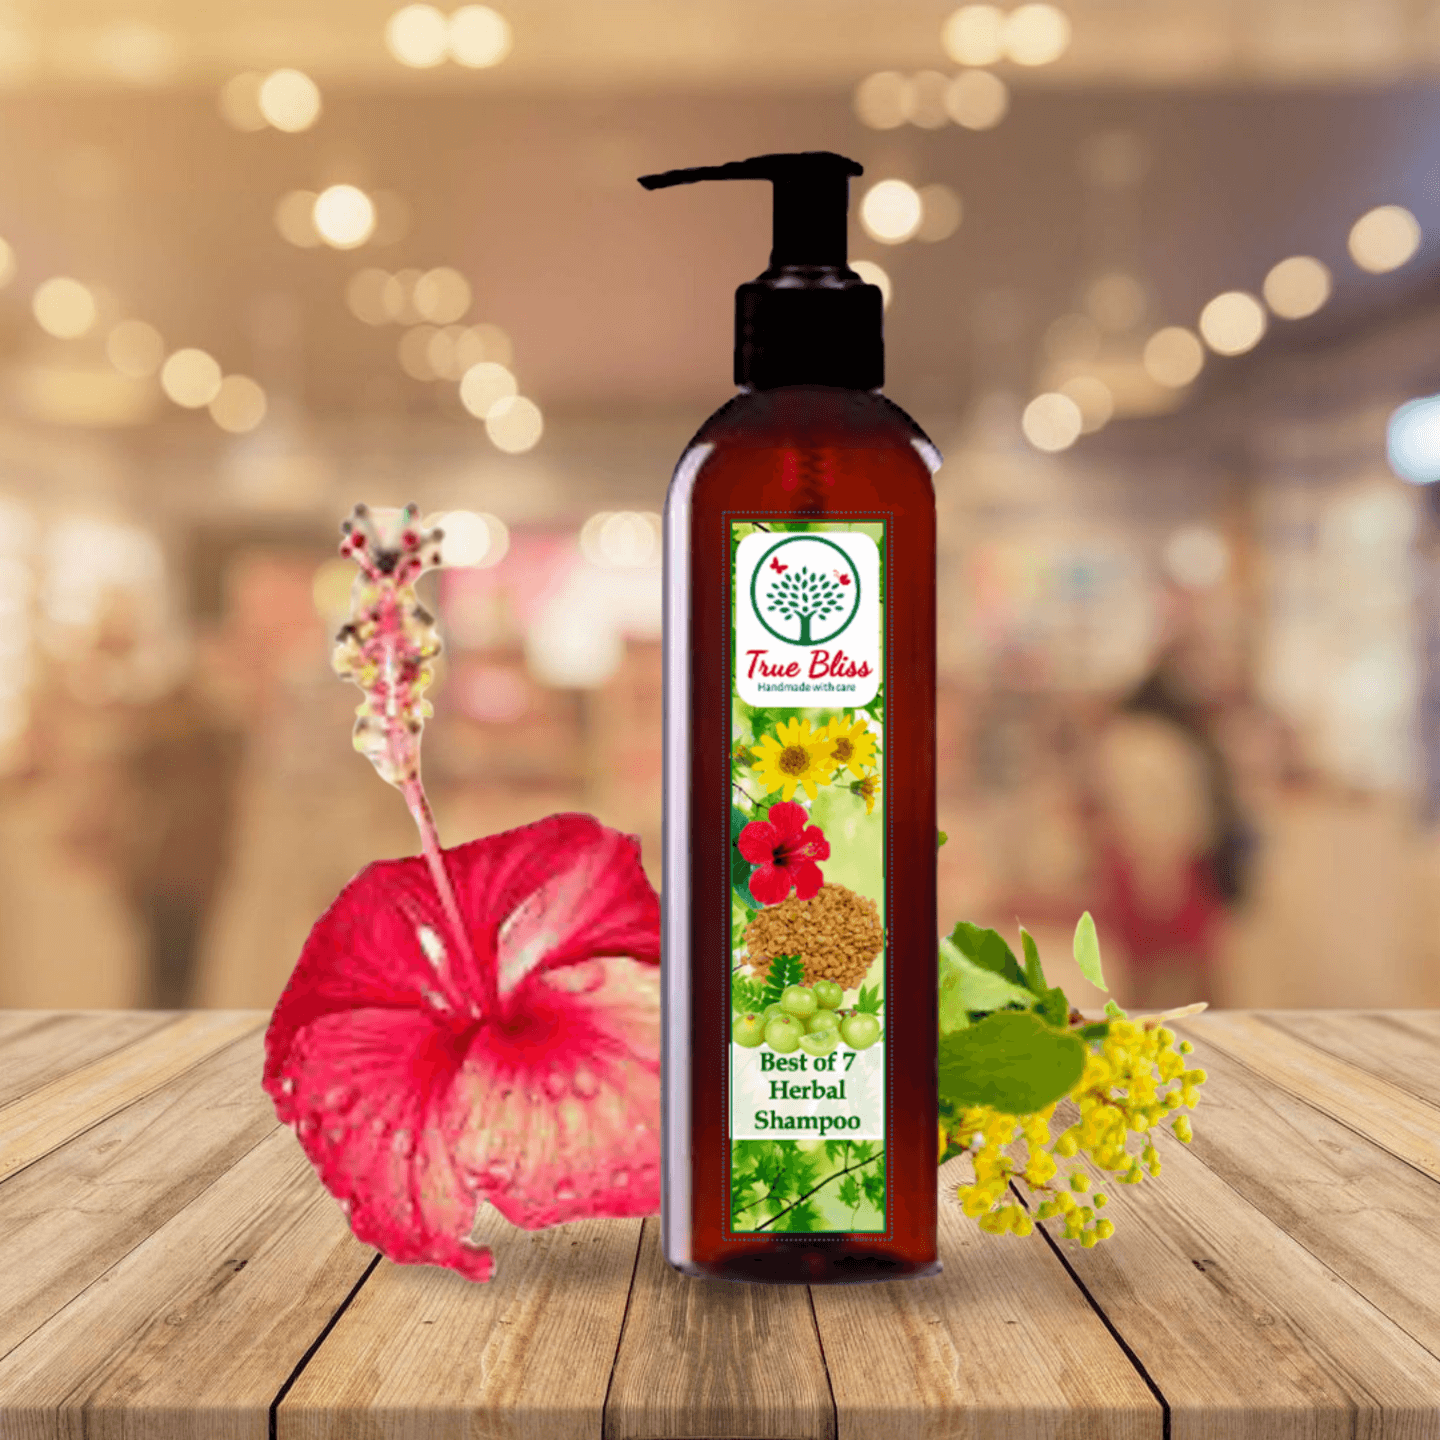 Best of 7 Herbal Shampoo - TrueBliss Skincare